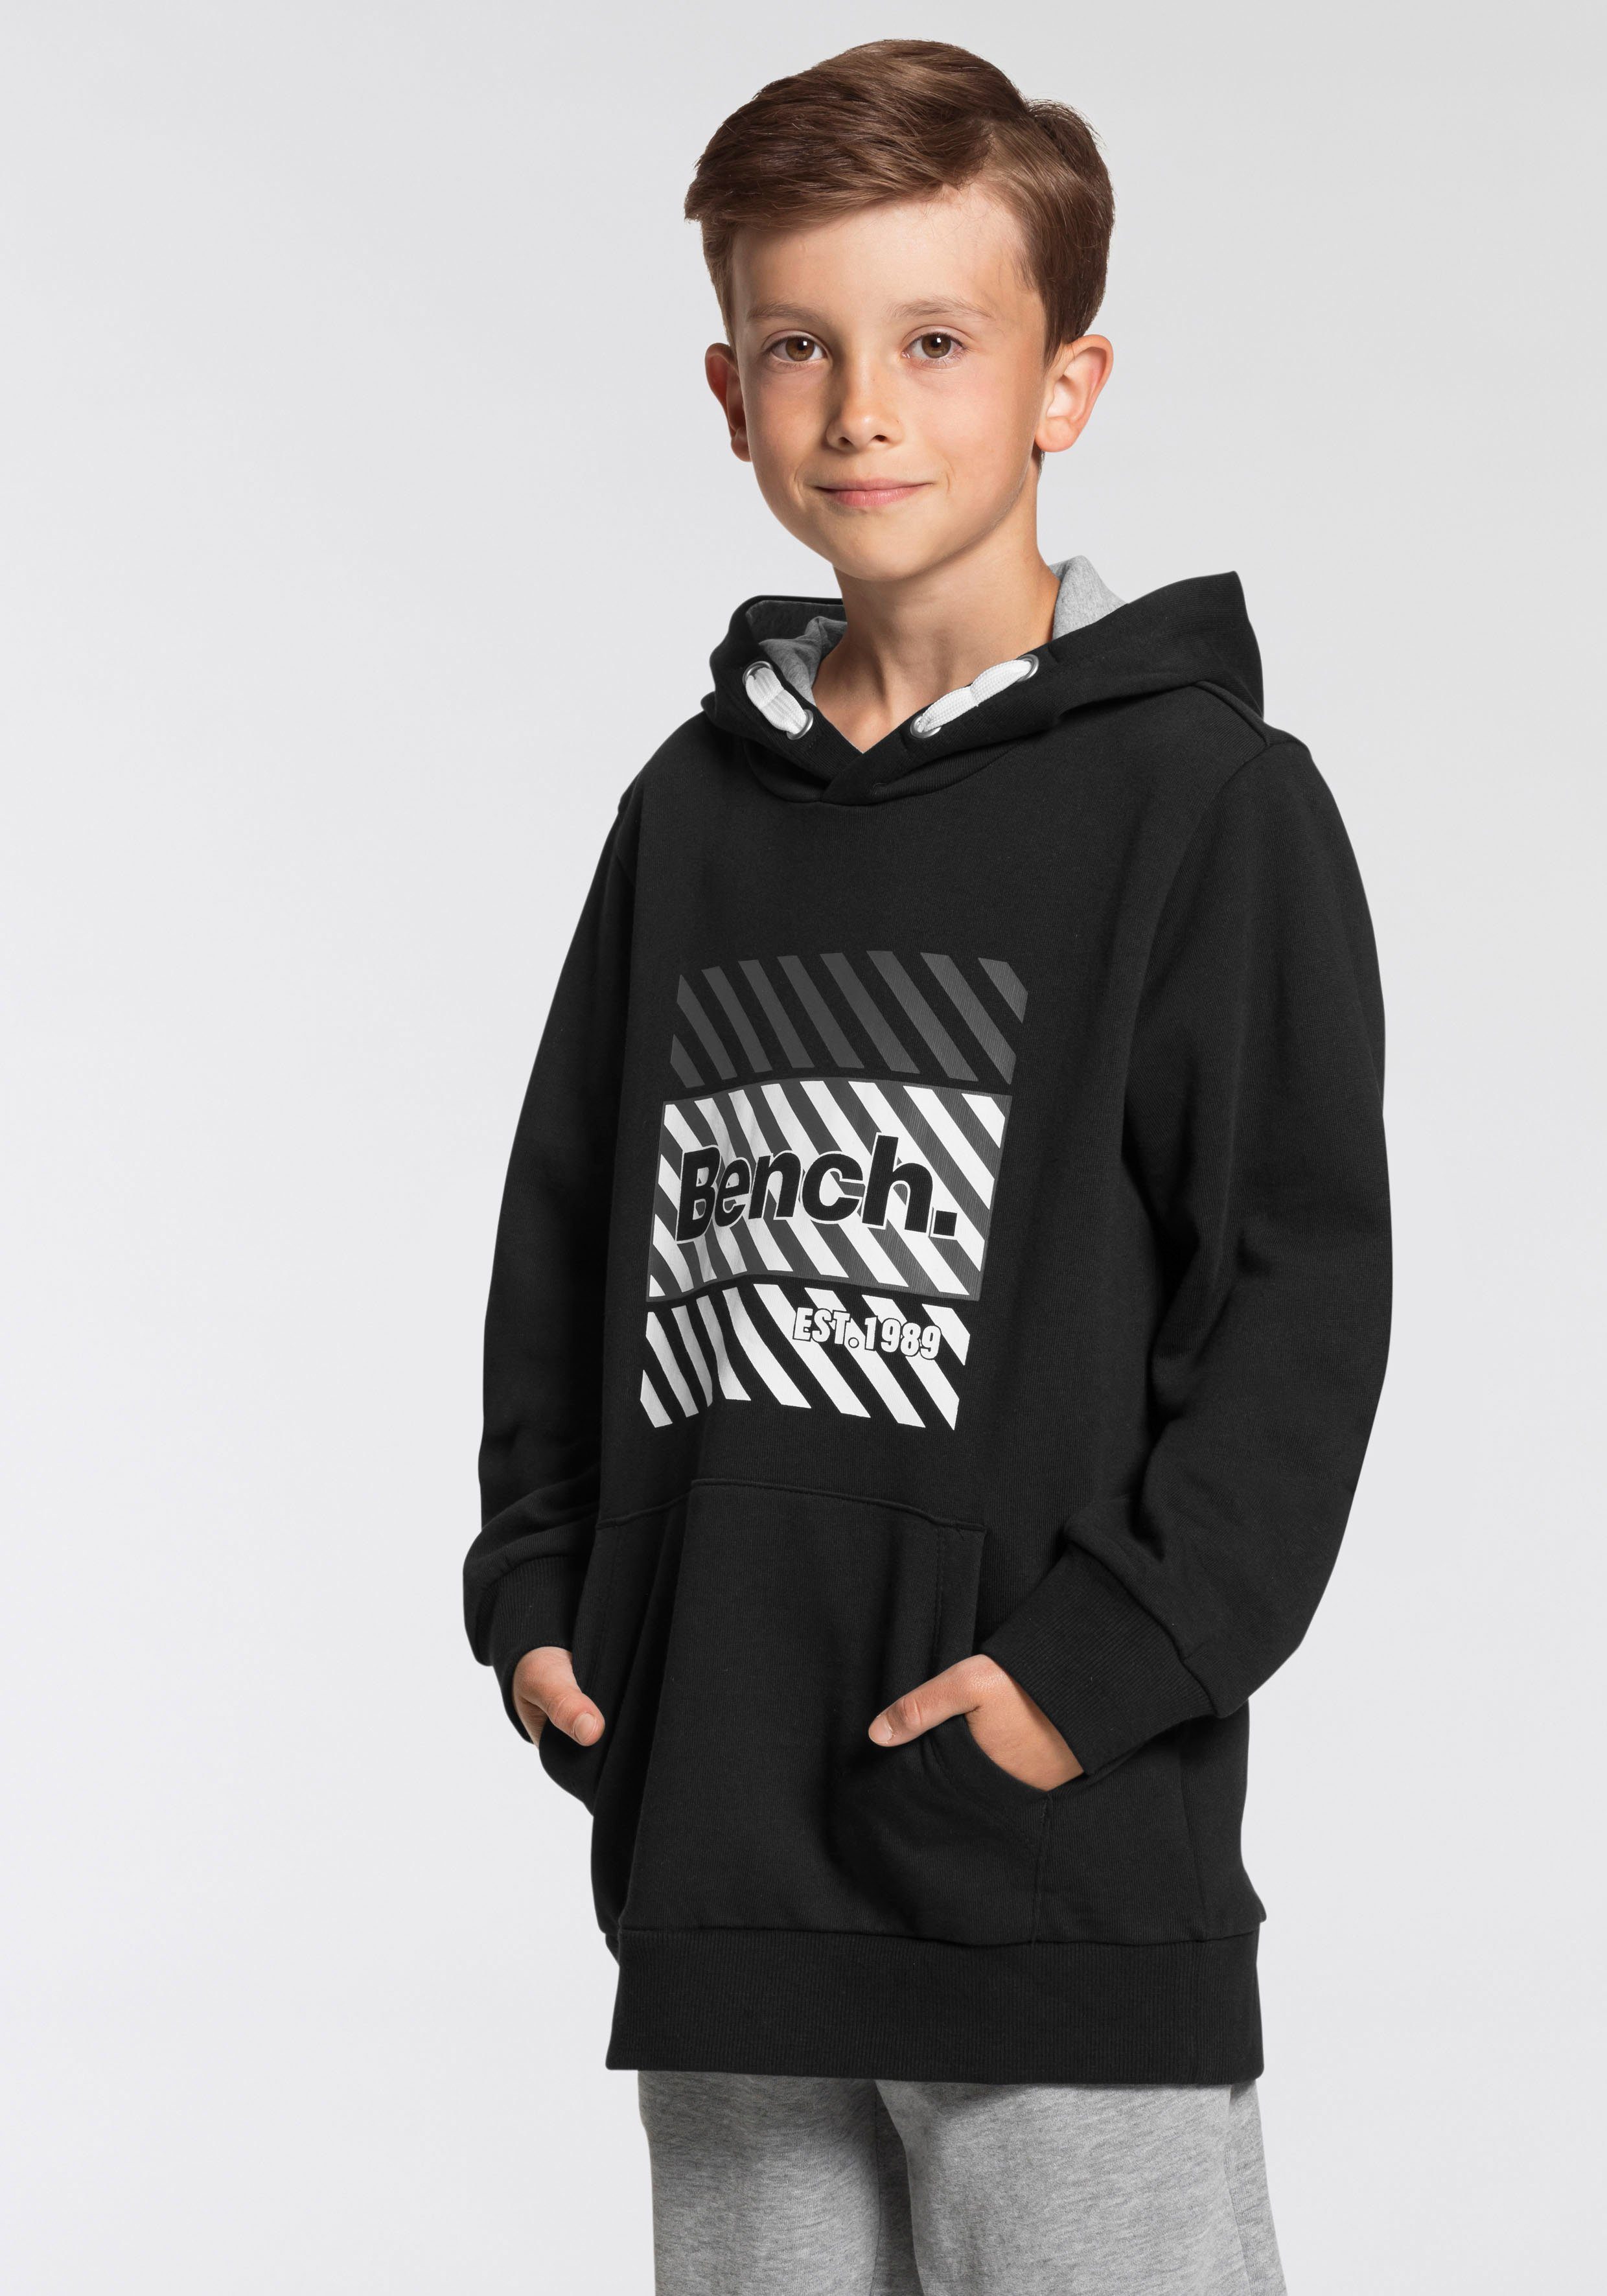 Bench. Kapuzensweatshirt mit Black&White trendigem Druck